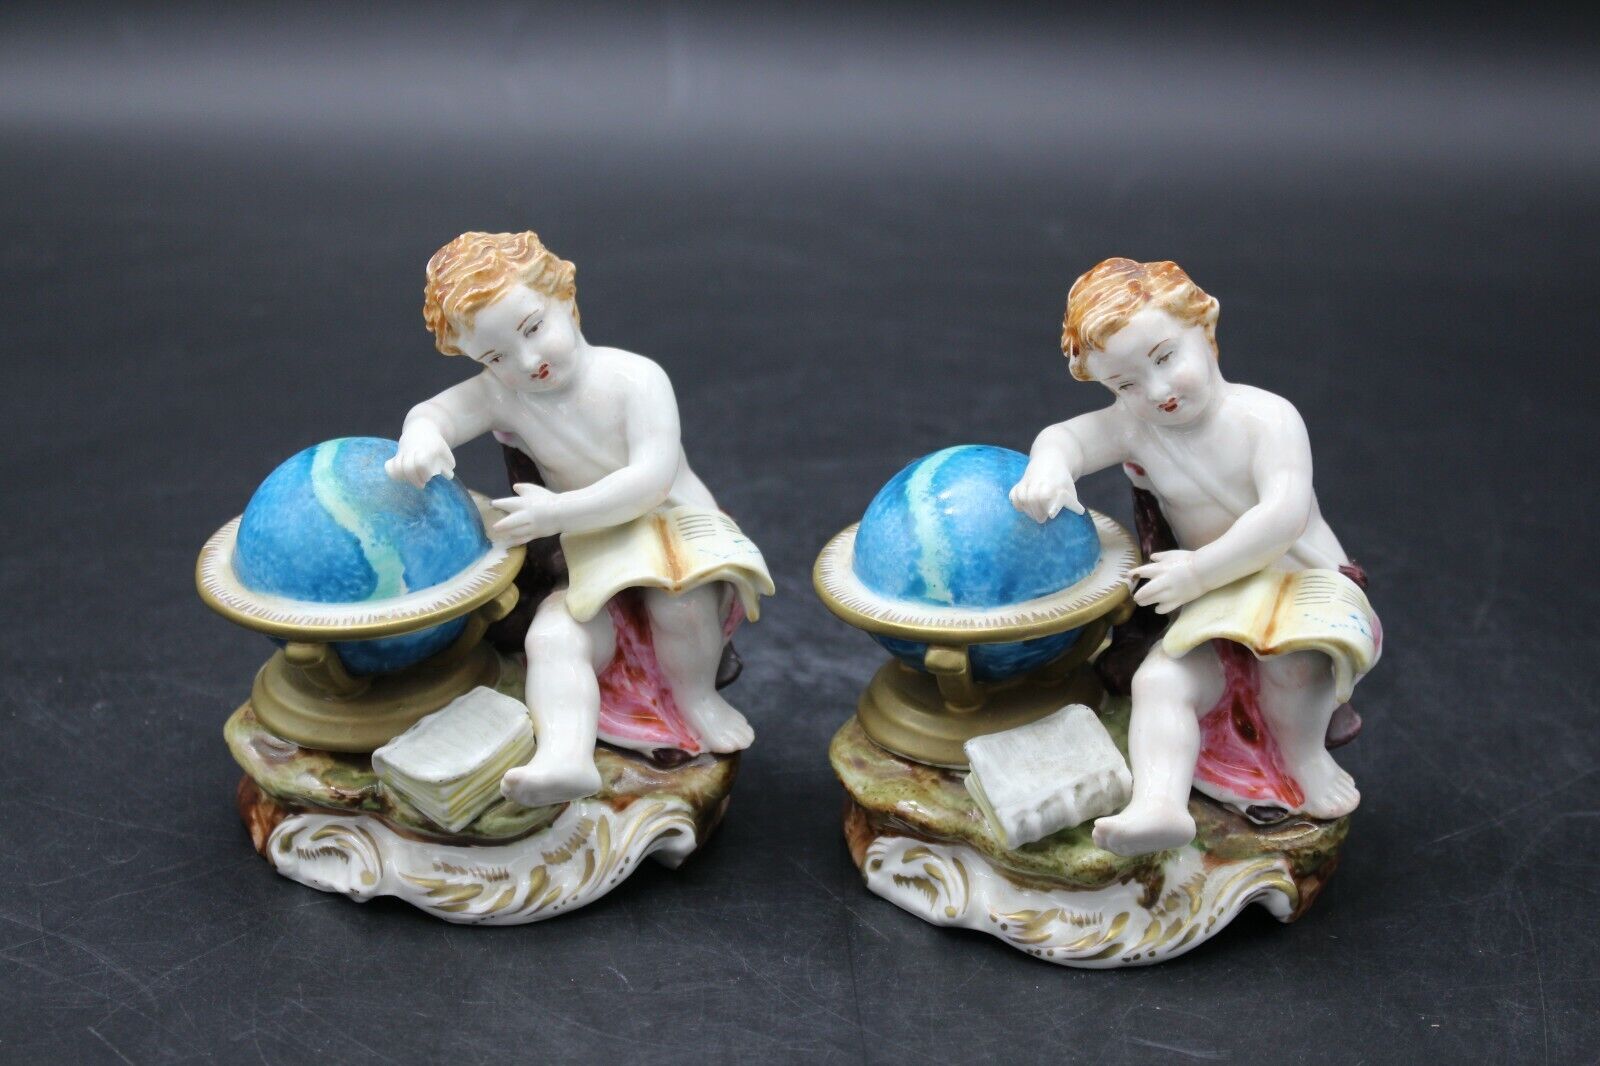 Pair of Hispania China Figurines Made in Spain